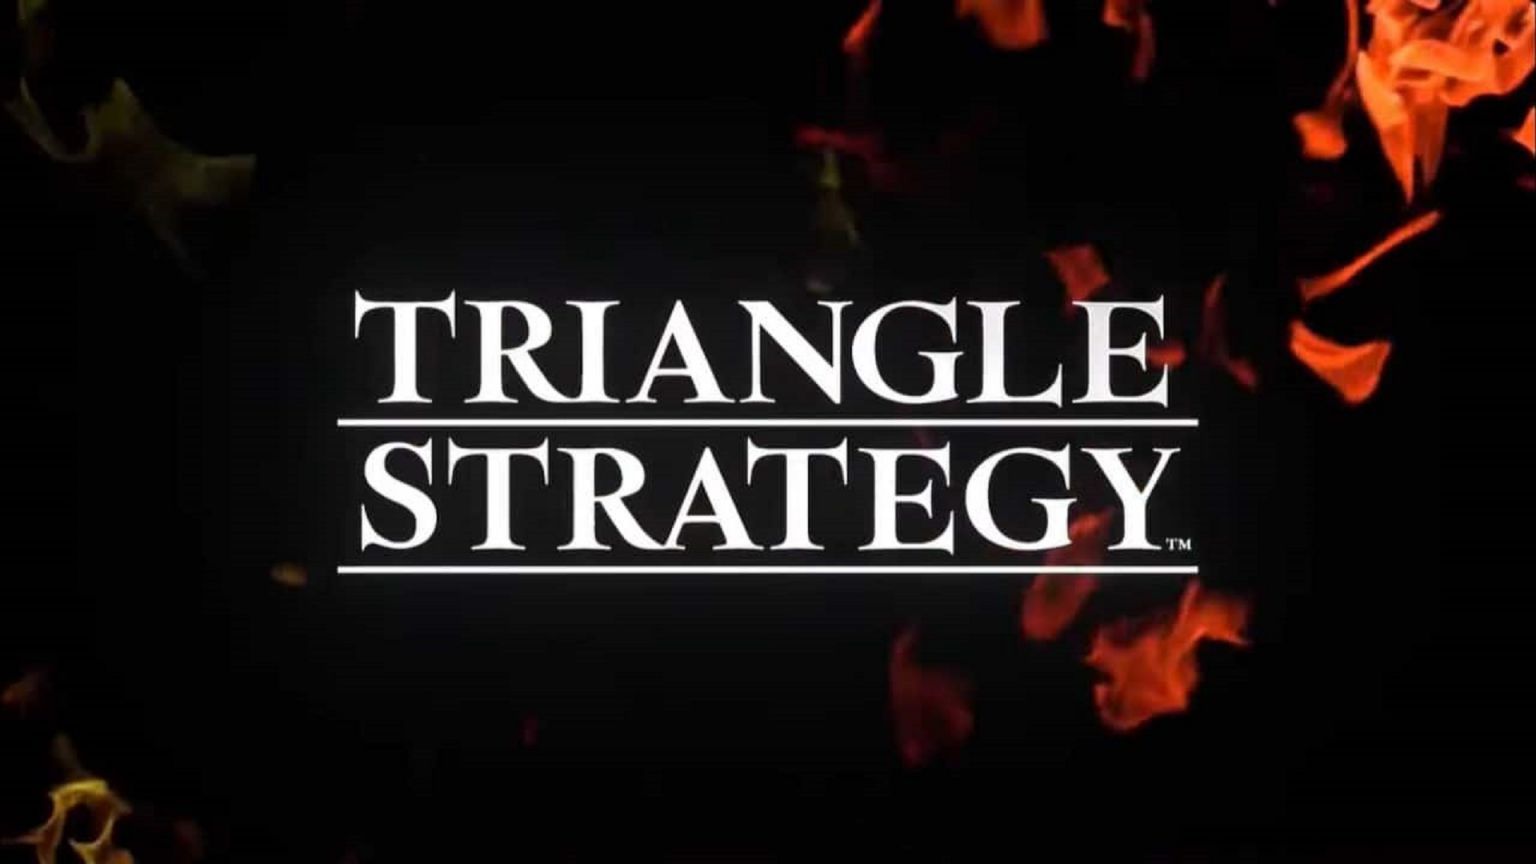 Triangle Strategy PC